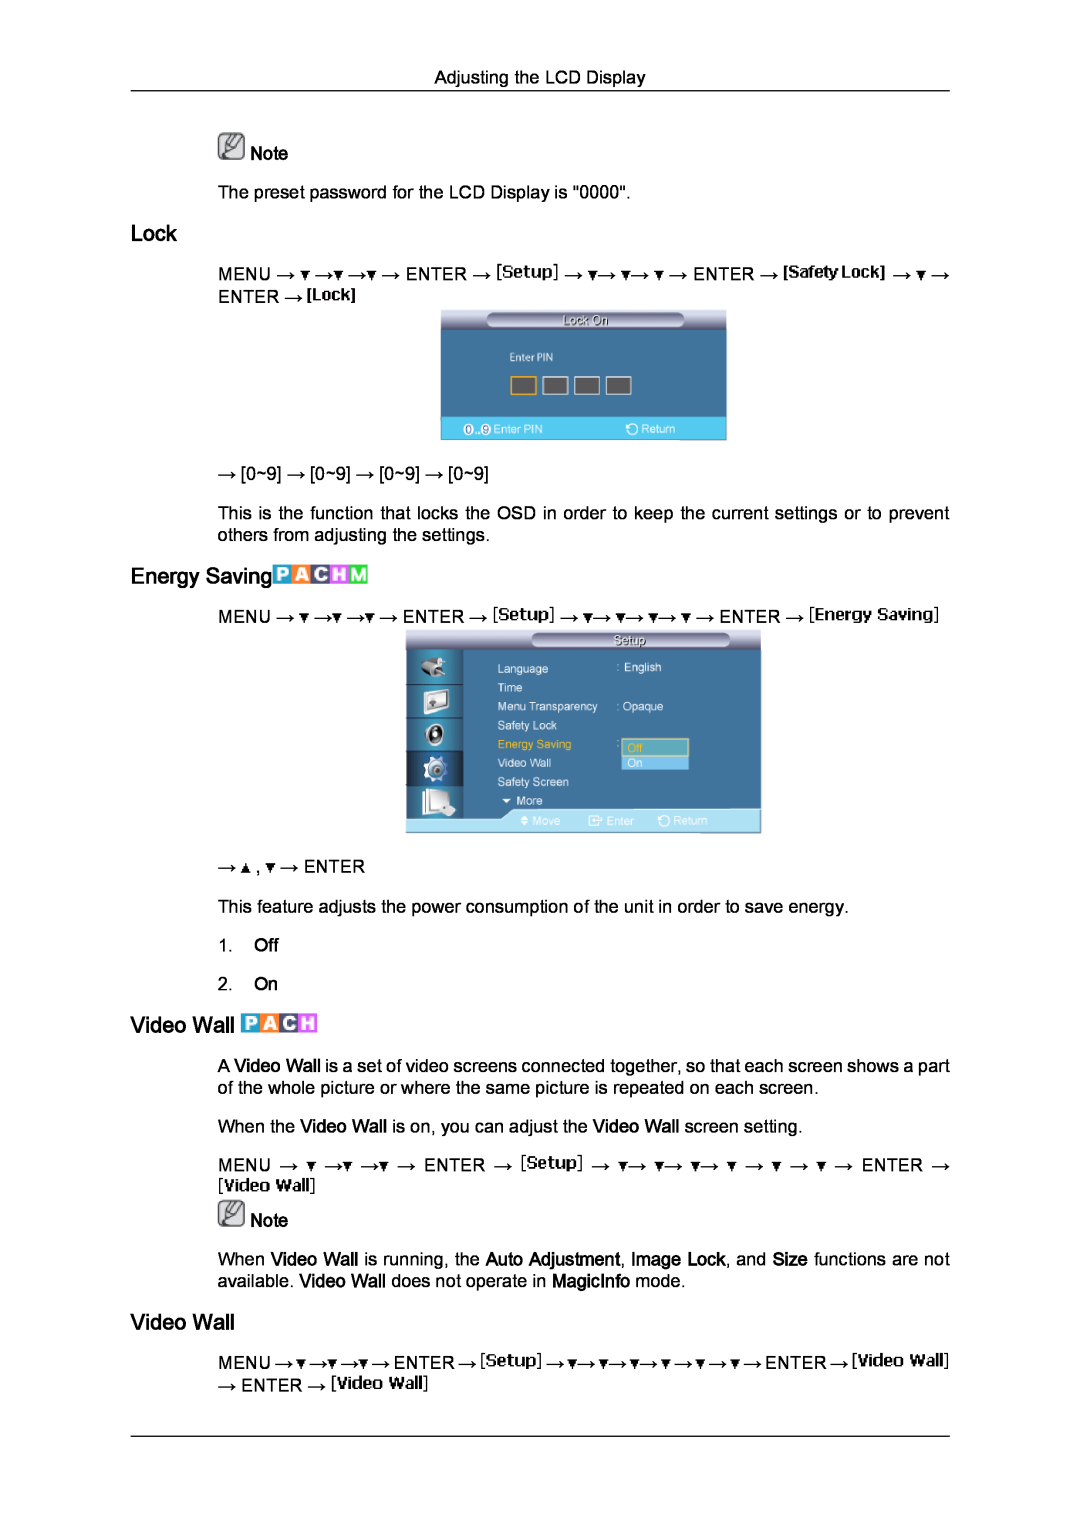 Samsung 650MP-2, 650FP-2 user manual Lock, Energy Saving, Video Wall, Off 2. On 